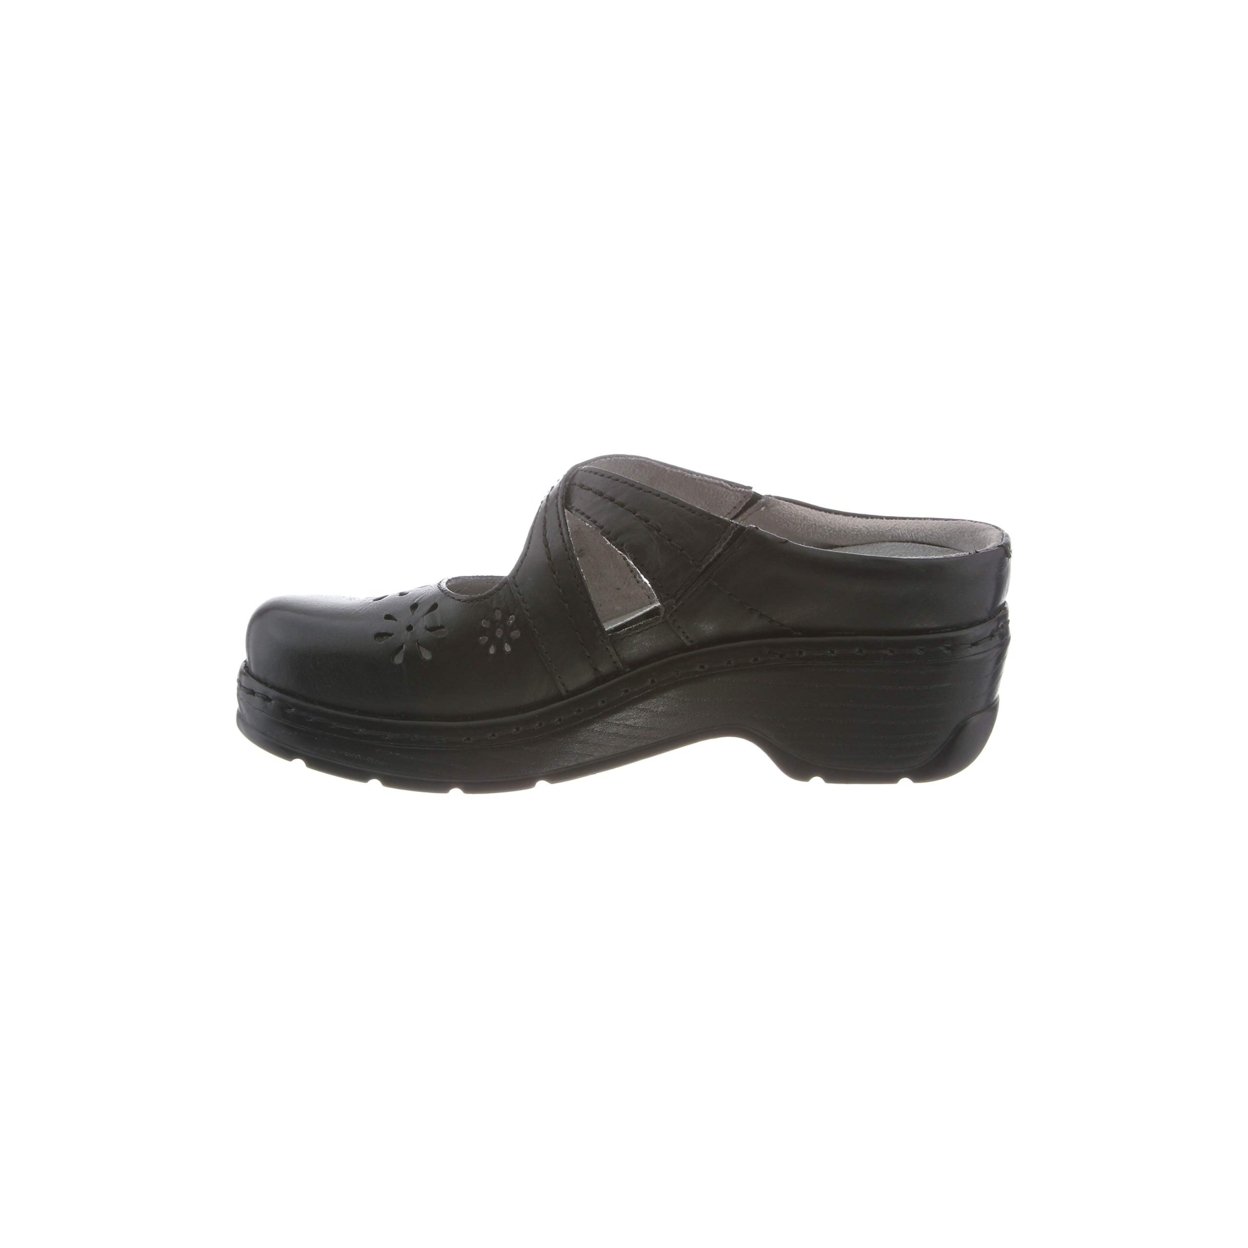 KLOGS Footwear Women's Carolina Leather Mary-Jane BLACK SMOOTH - BLACK SMOOTH, 6.5-M